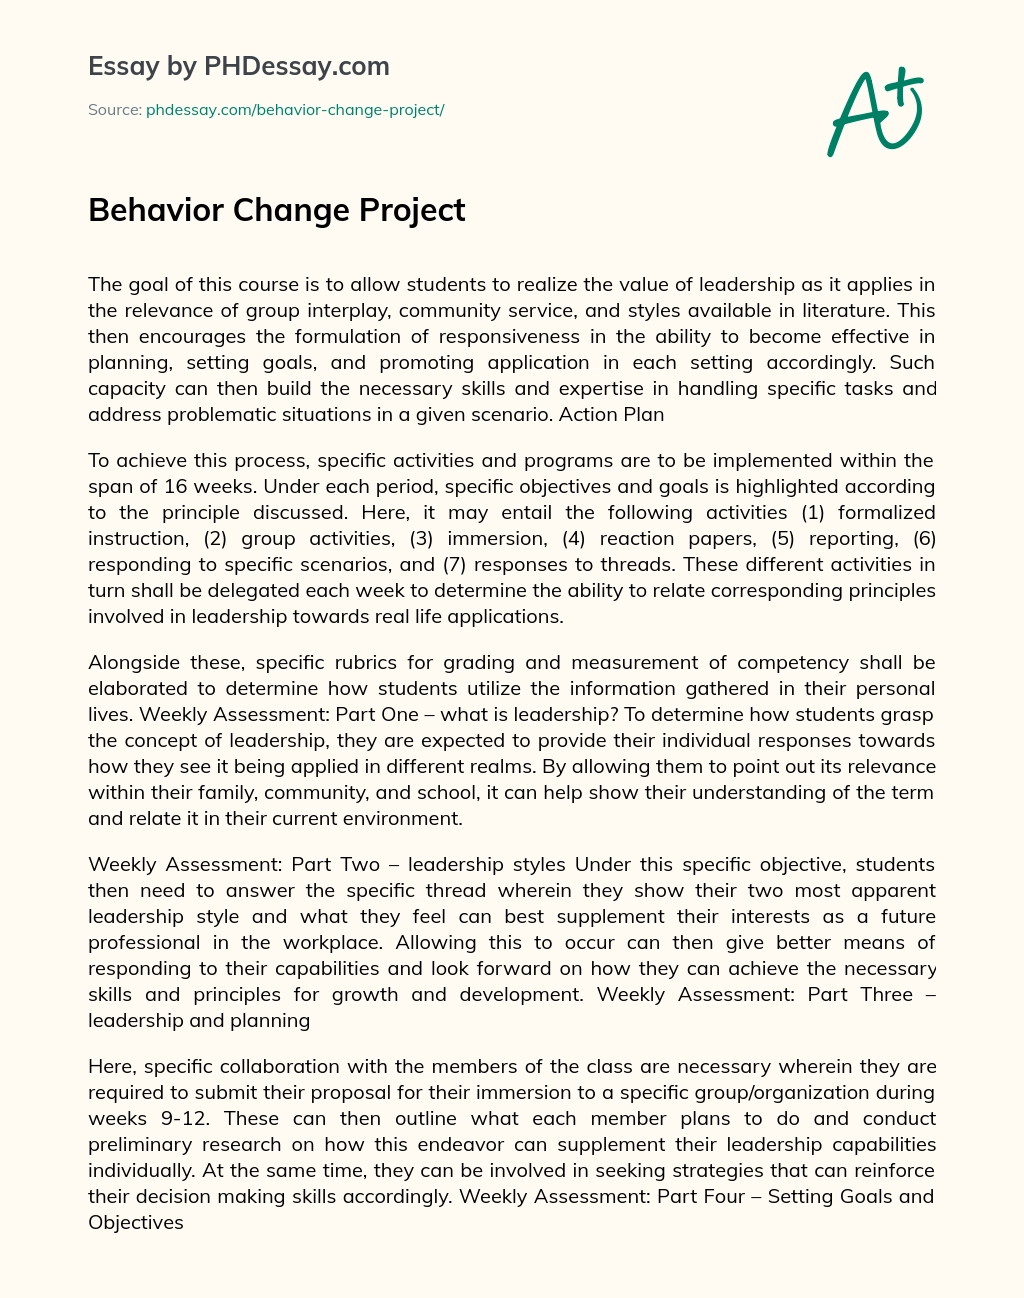 Behavior Change Project essay